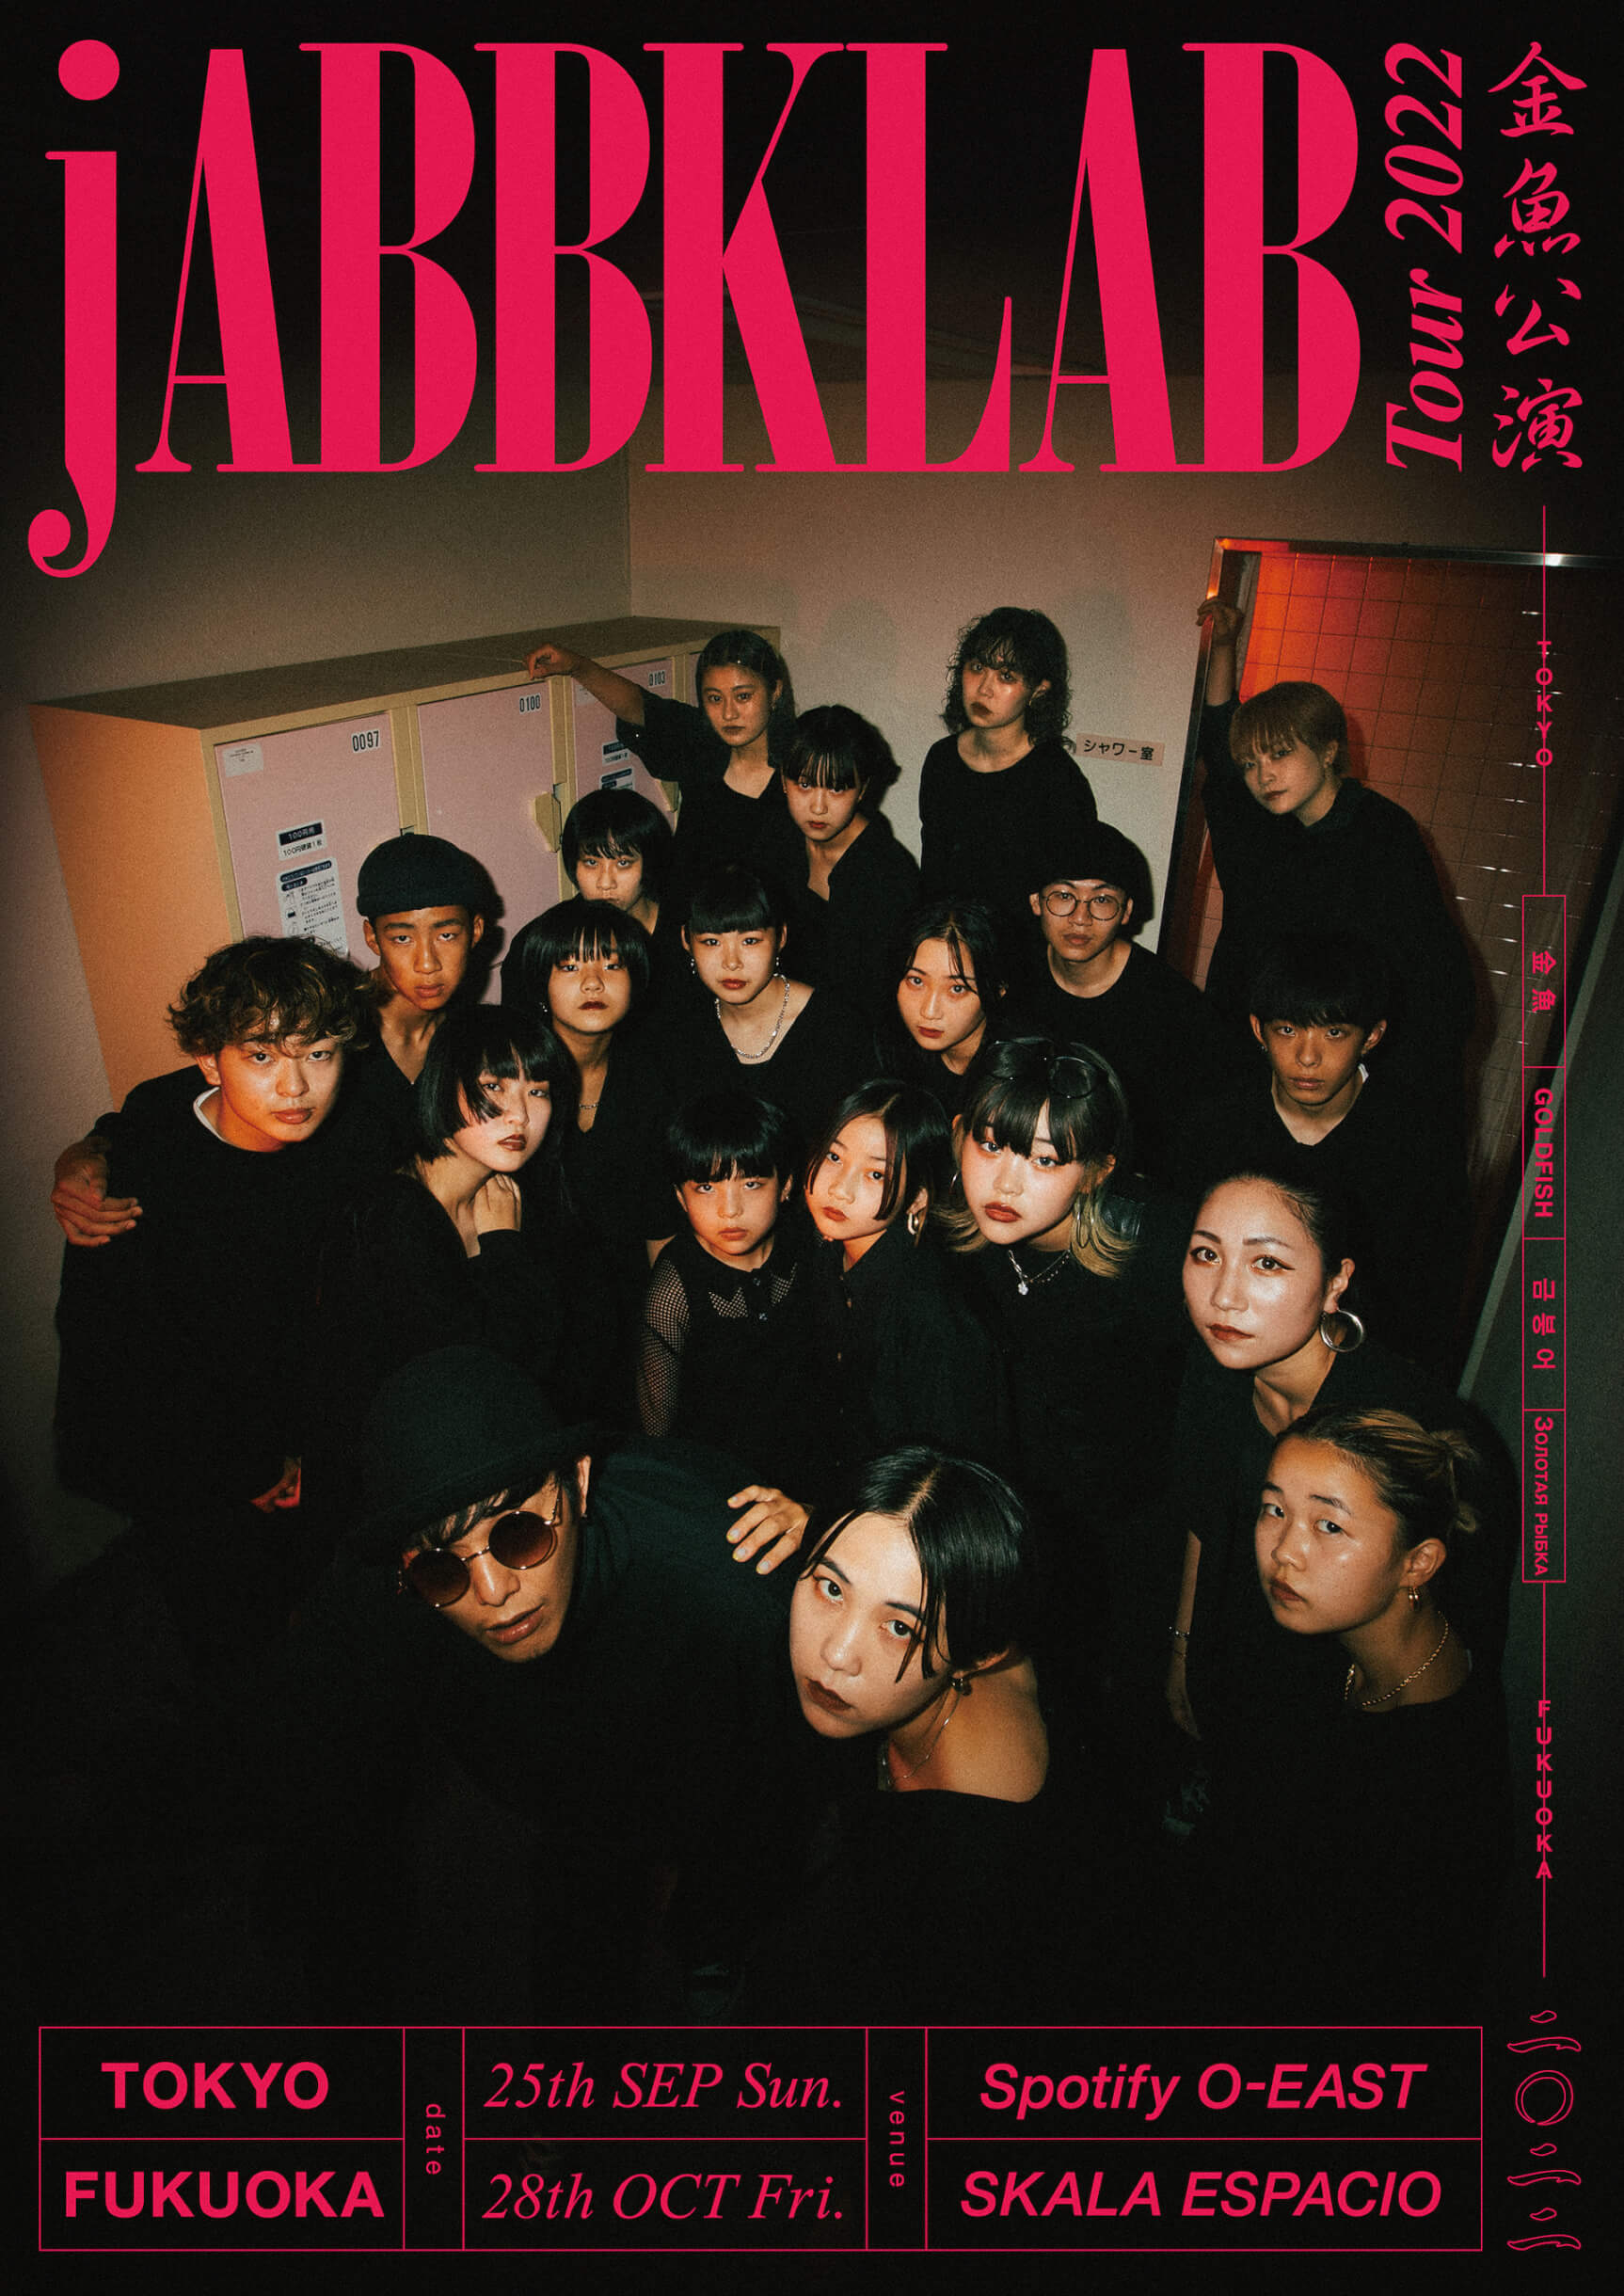 yurinasia率いる「jABBKLAB」初の単独名義ツアーが東京・福岡にて開催決定 art-culture220721-jabbklab-1